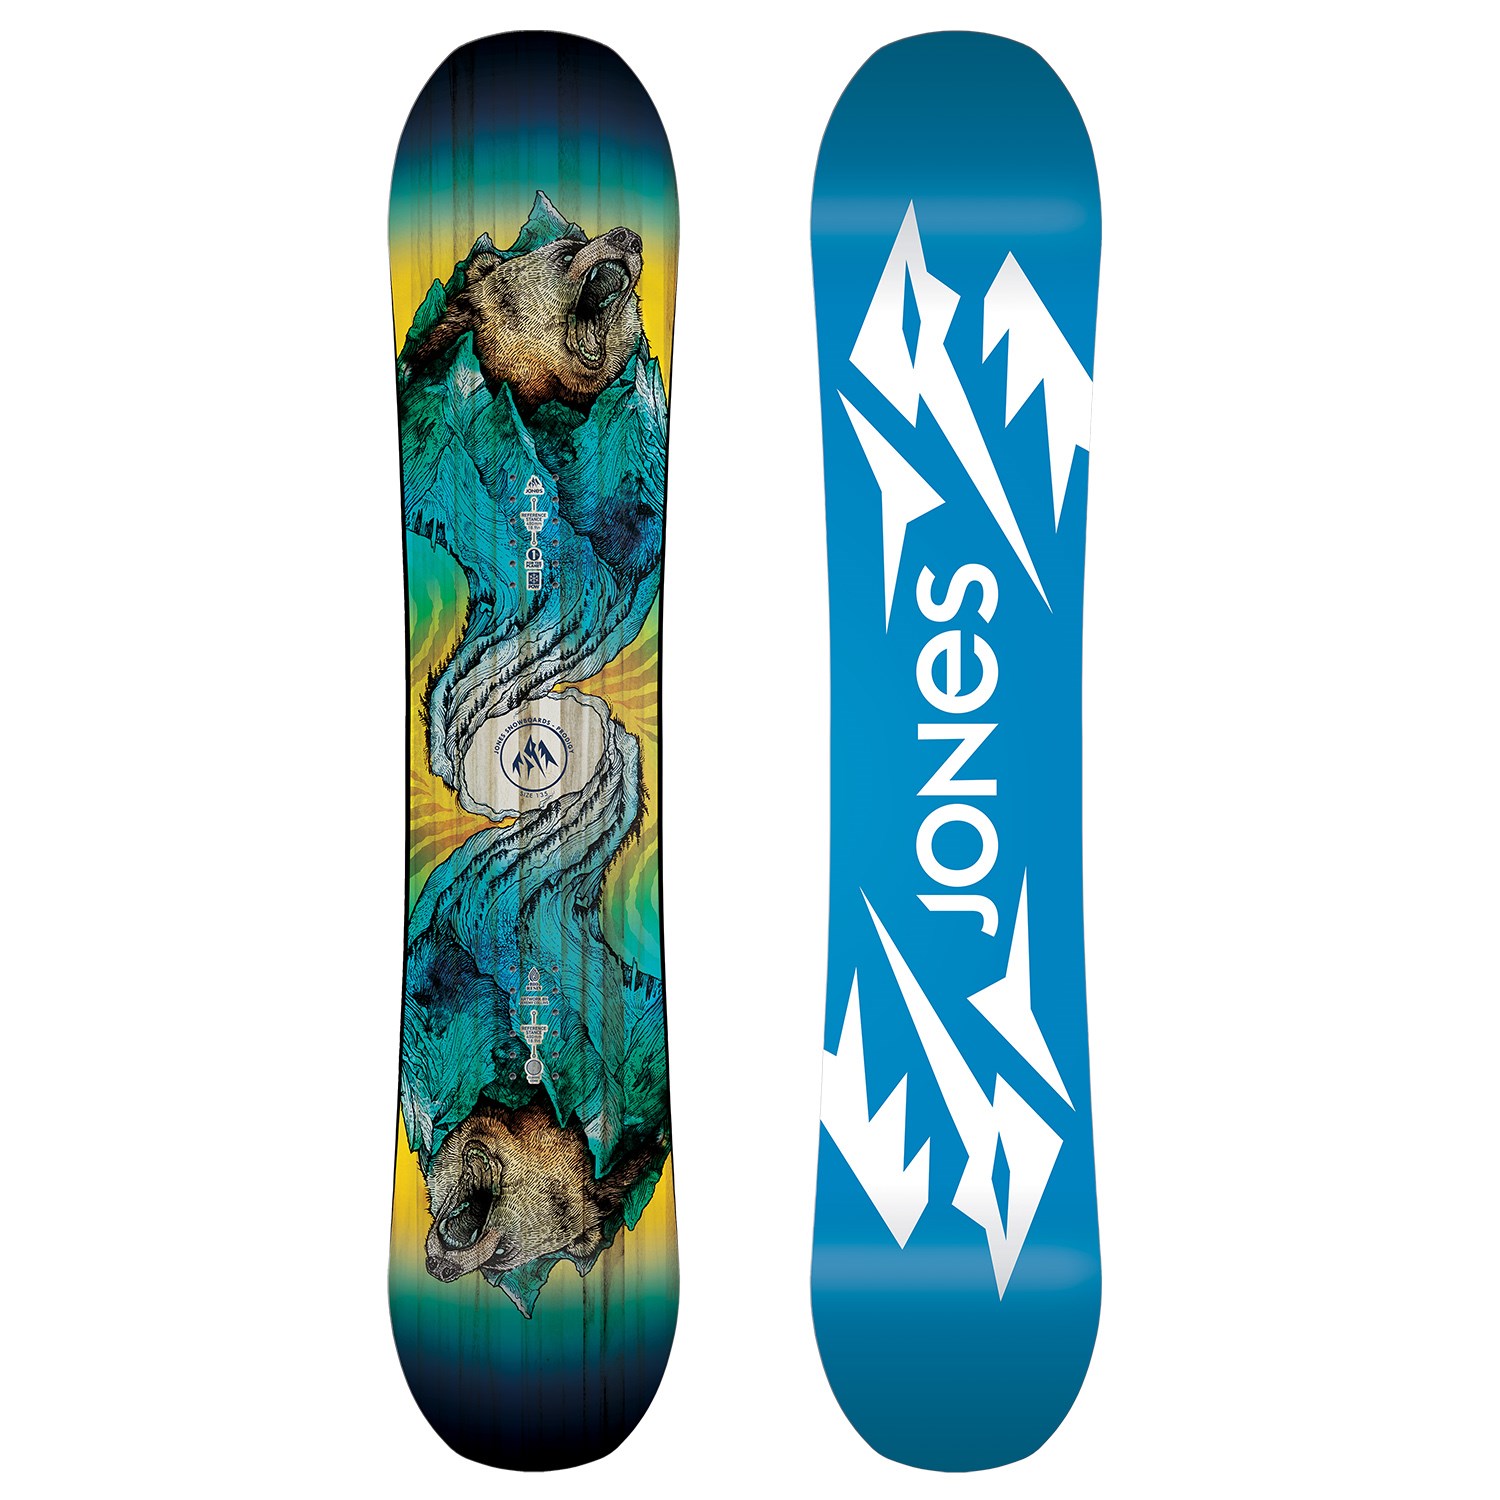 Futures Fins Surf Sticker 12/" Large Skate Surfboard Snowboard Decal Blue